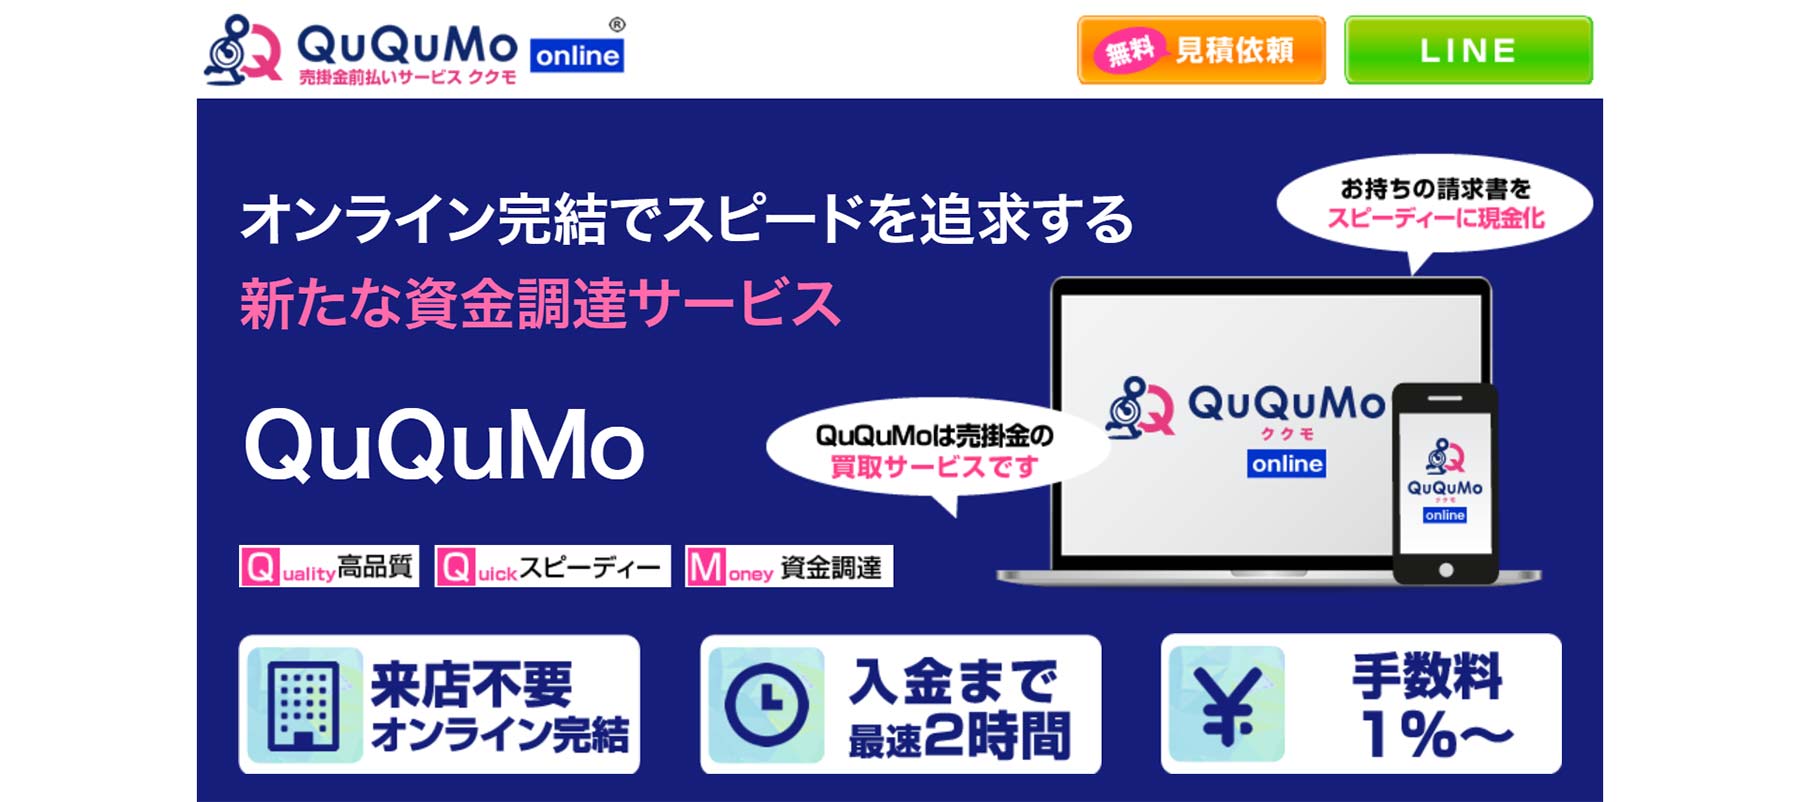 QuQuMo公式Webサイト